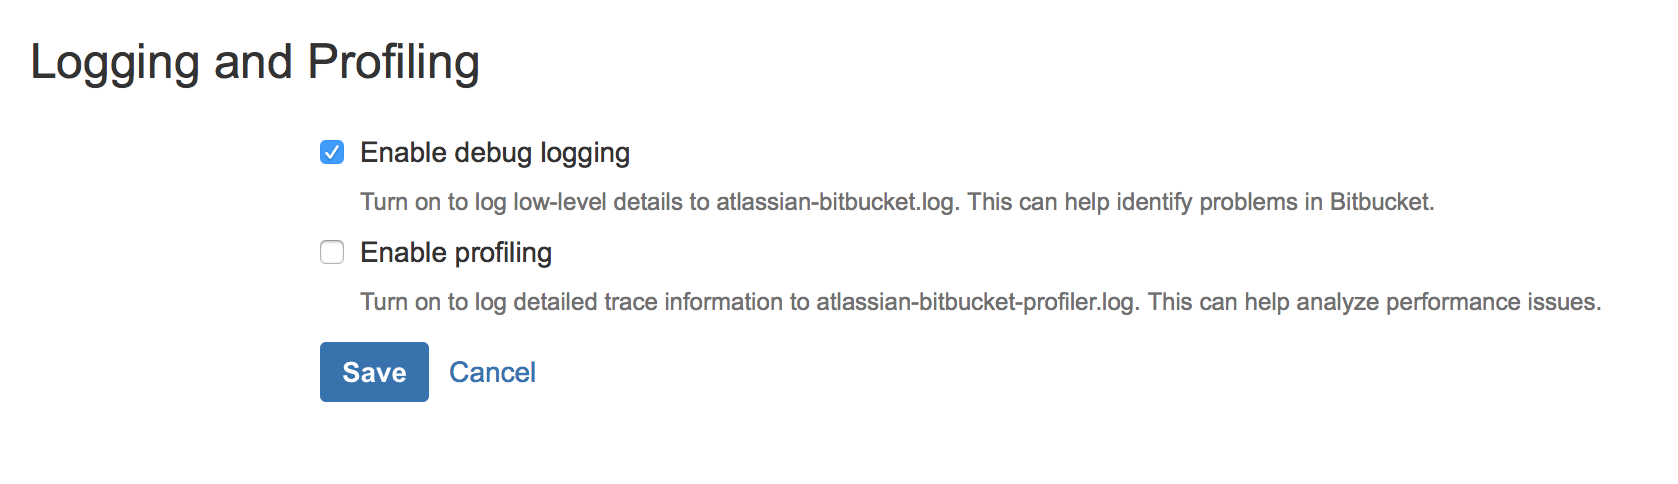 Bitbucket logging and profiling